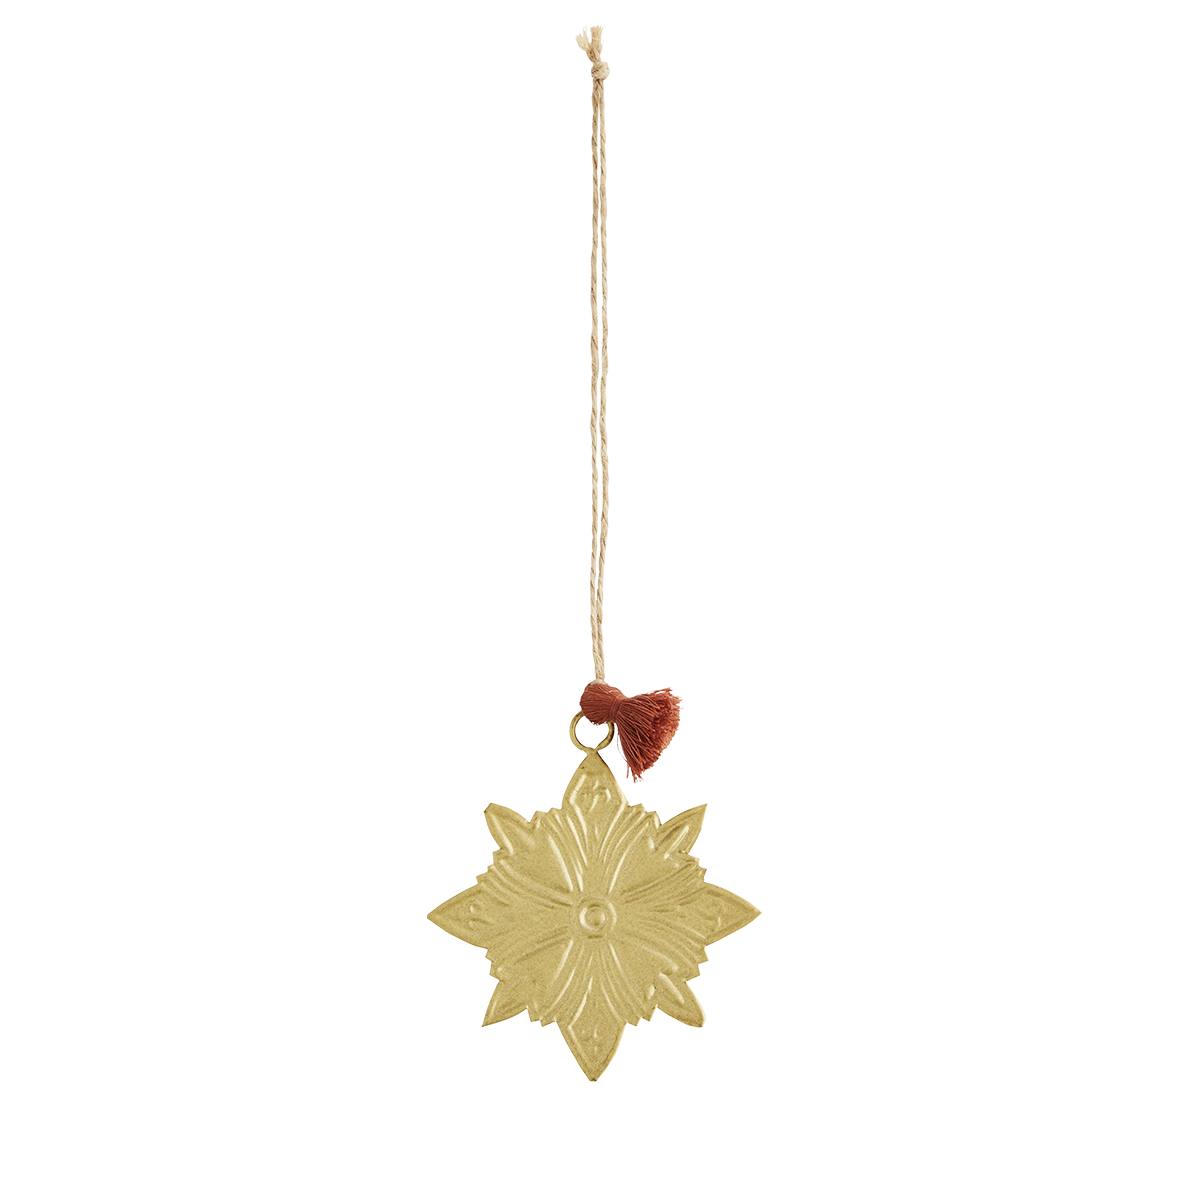 Hanging iron star